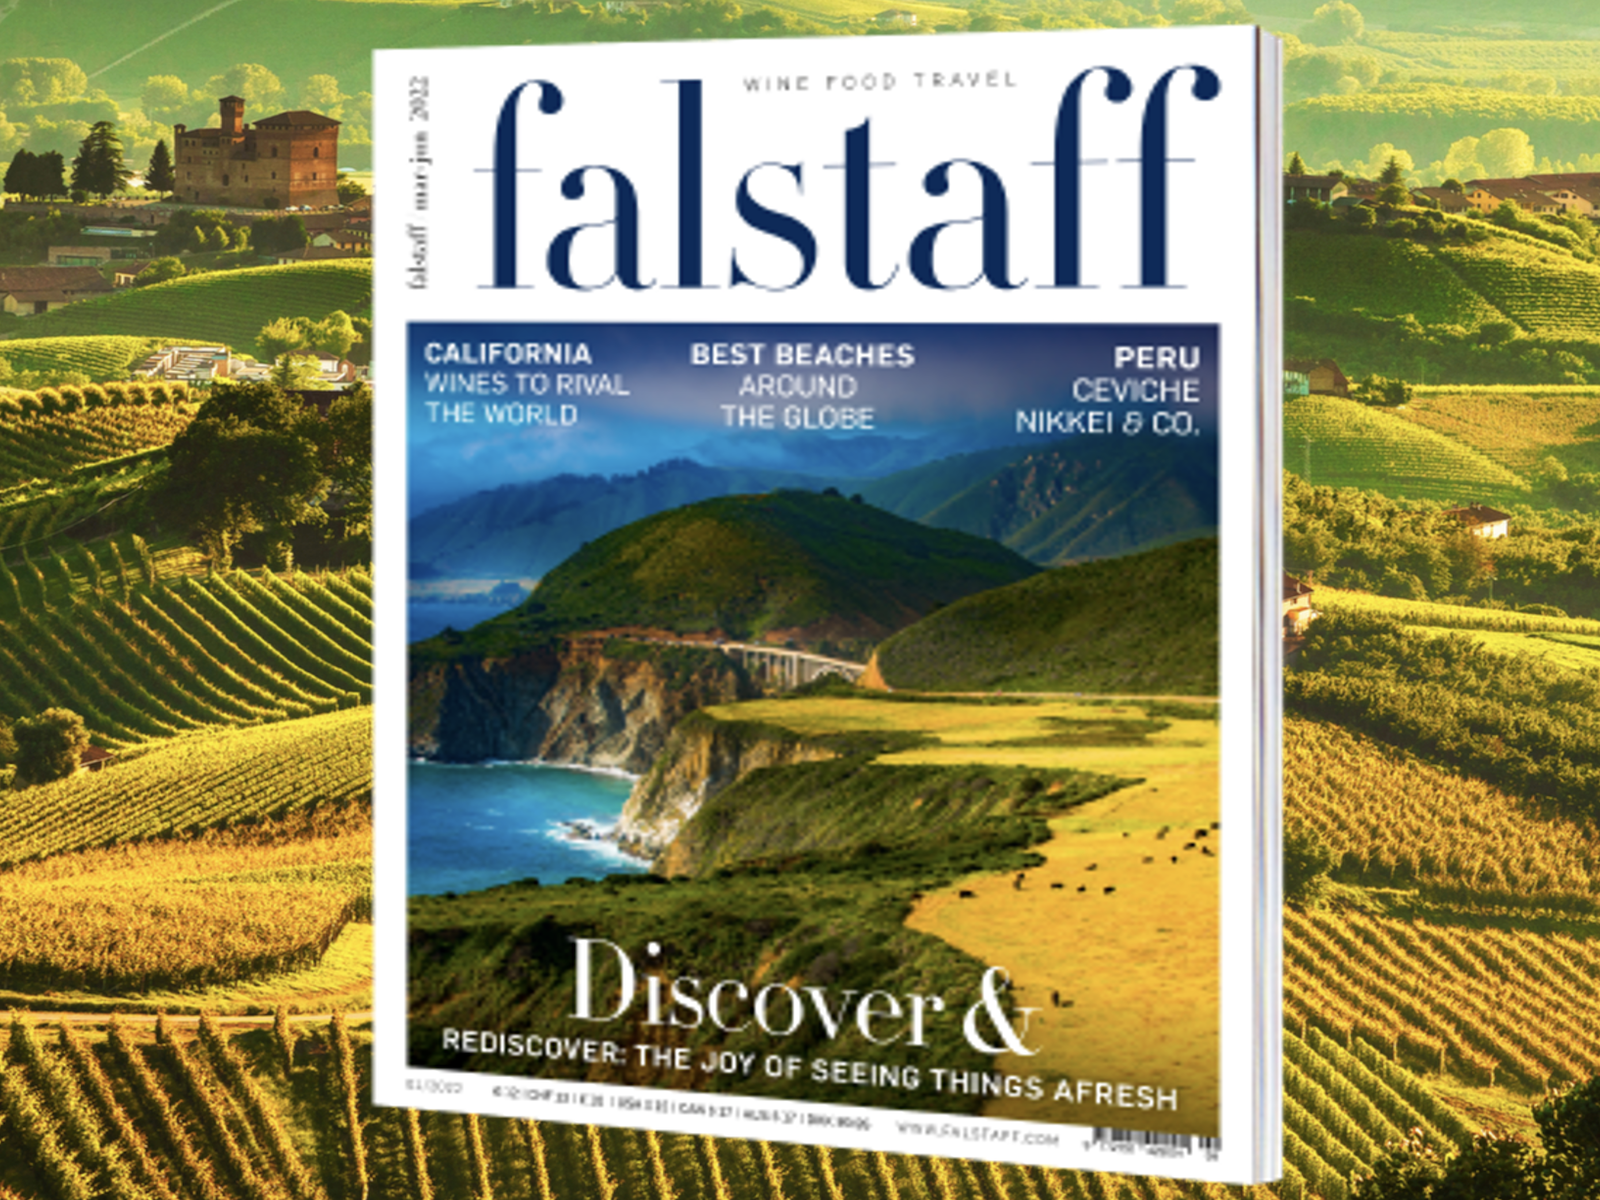 Falstaff International is dedicated to the joyful trinity of wine, food and travel.&nbsp;